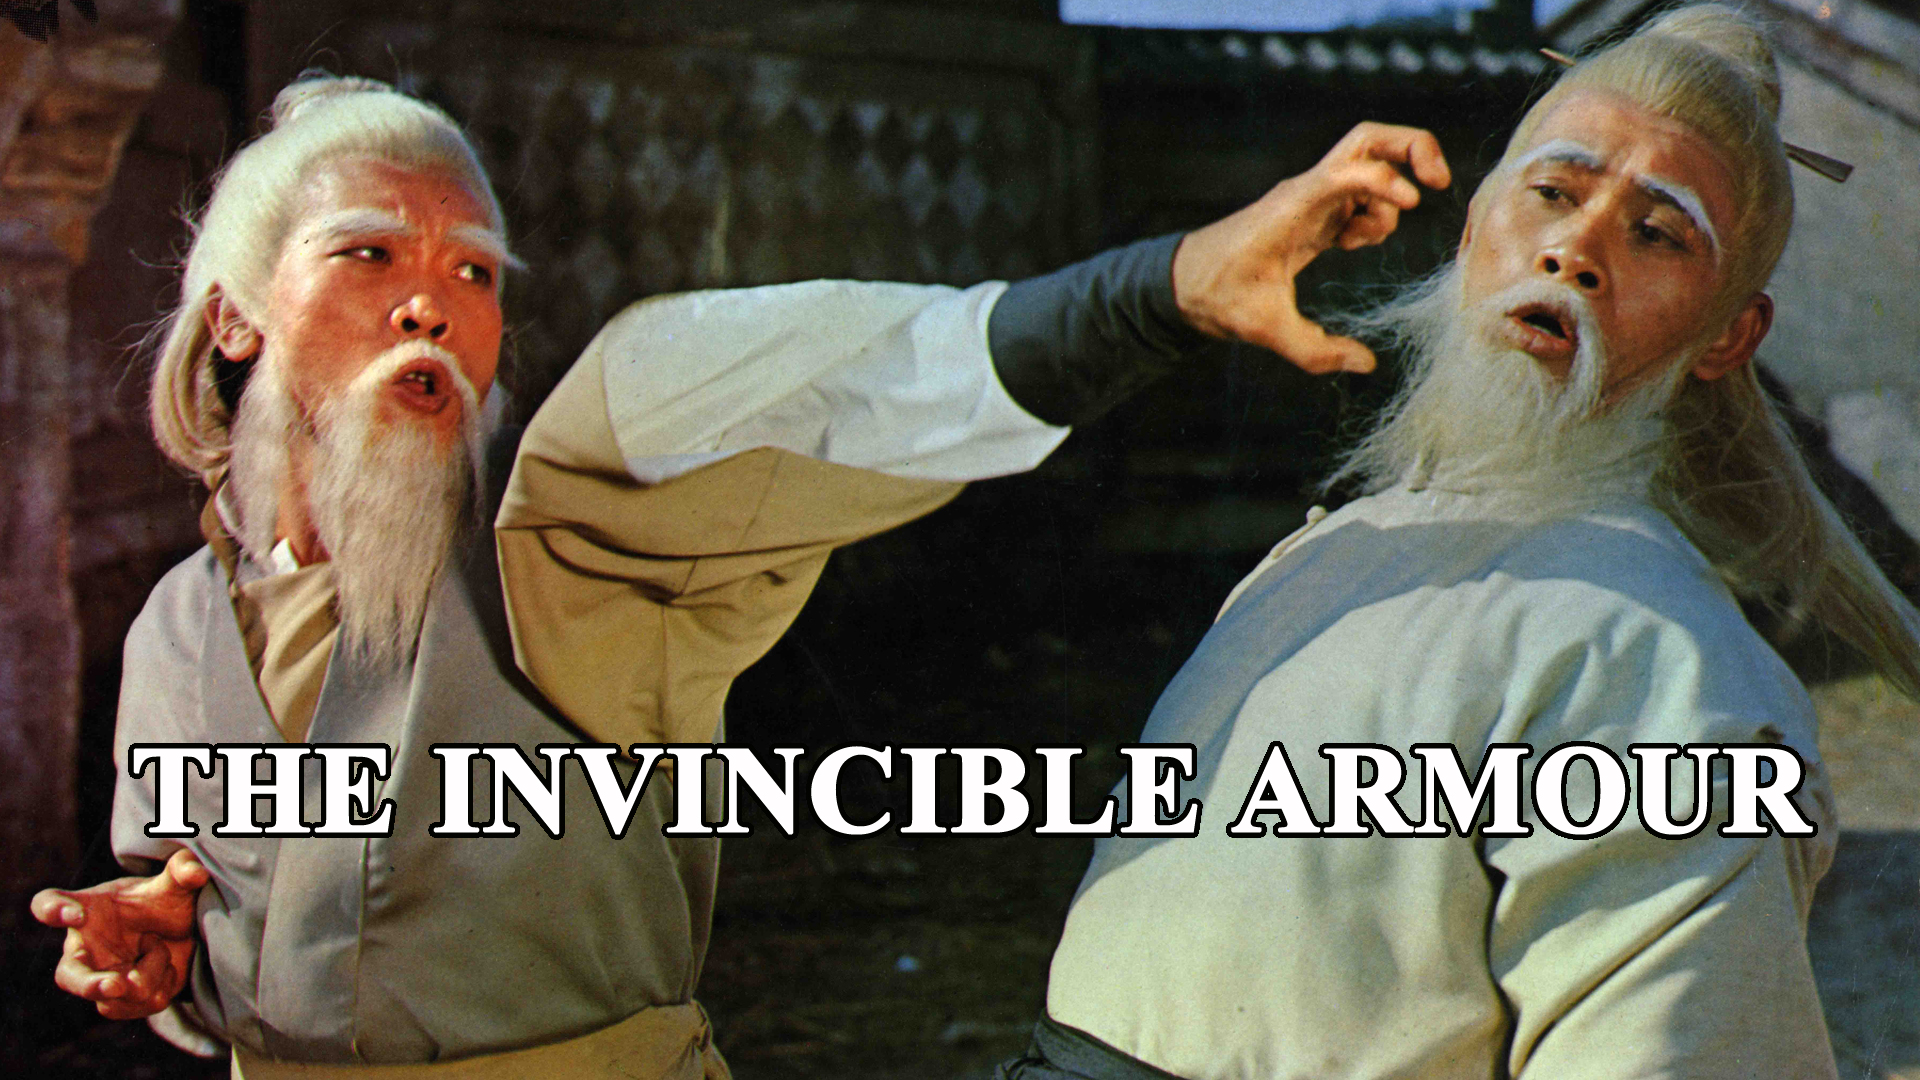 Invincible Armour